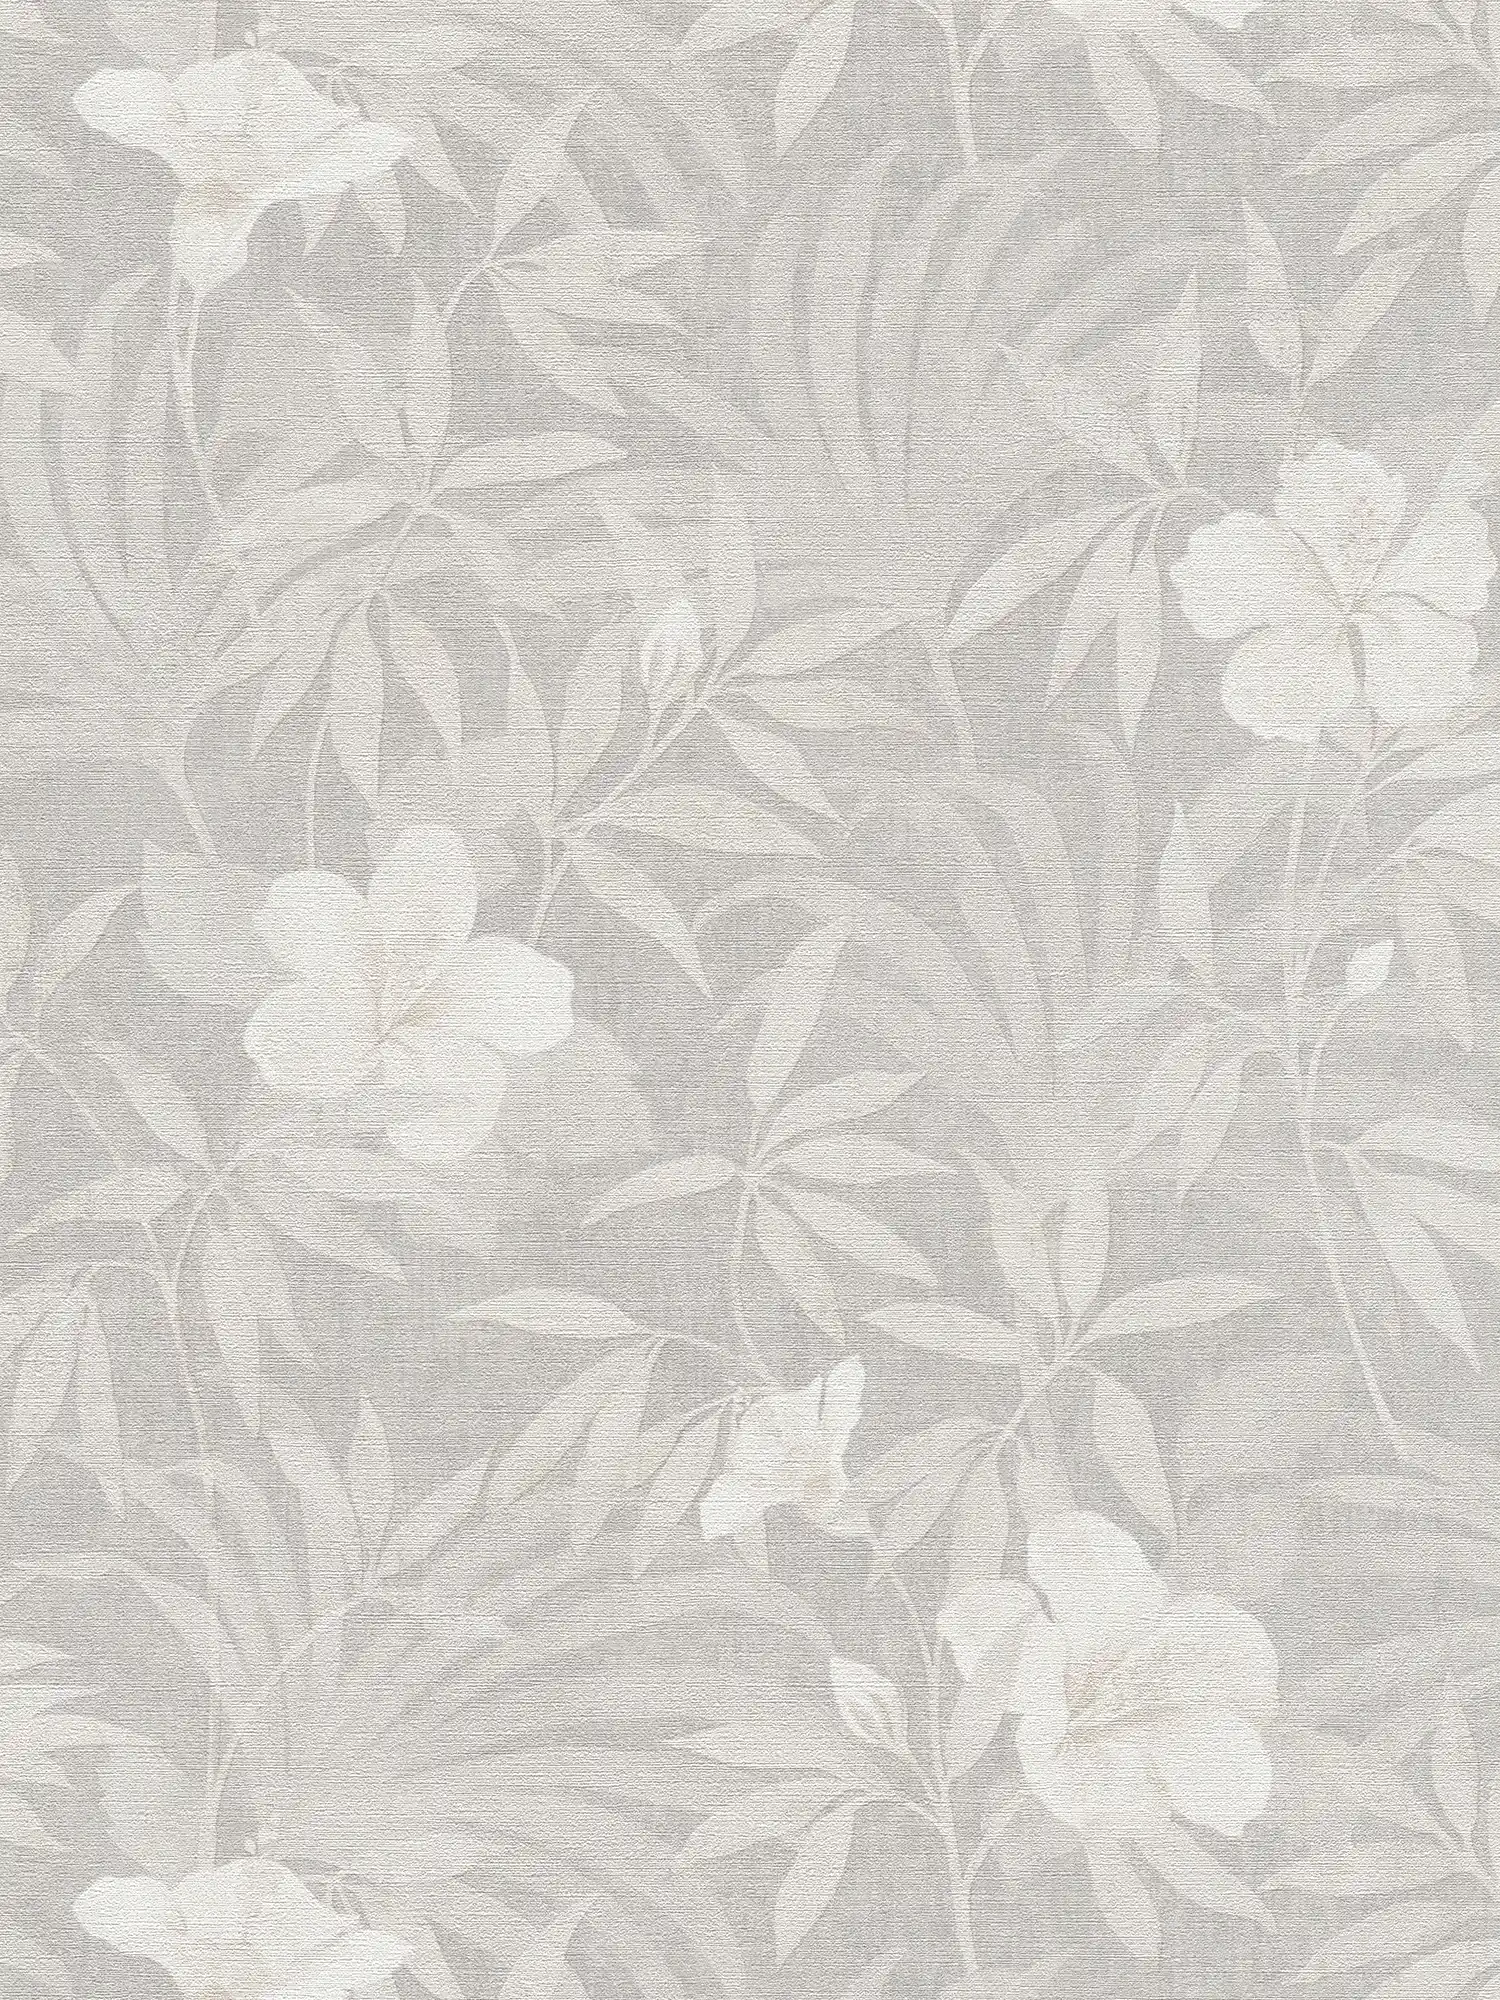 Linen optics wallpaper jungle leaves & flowers - beige, grey
